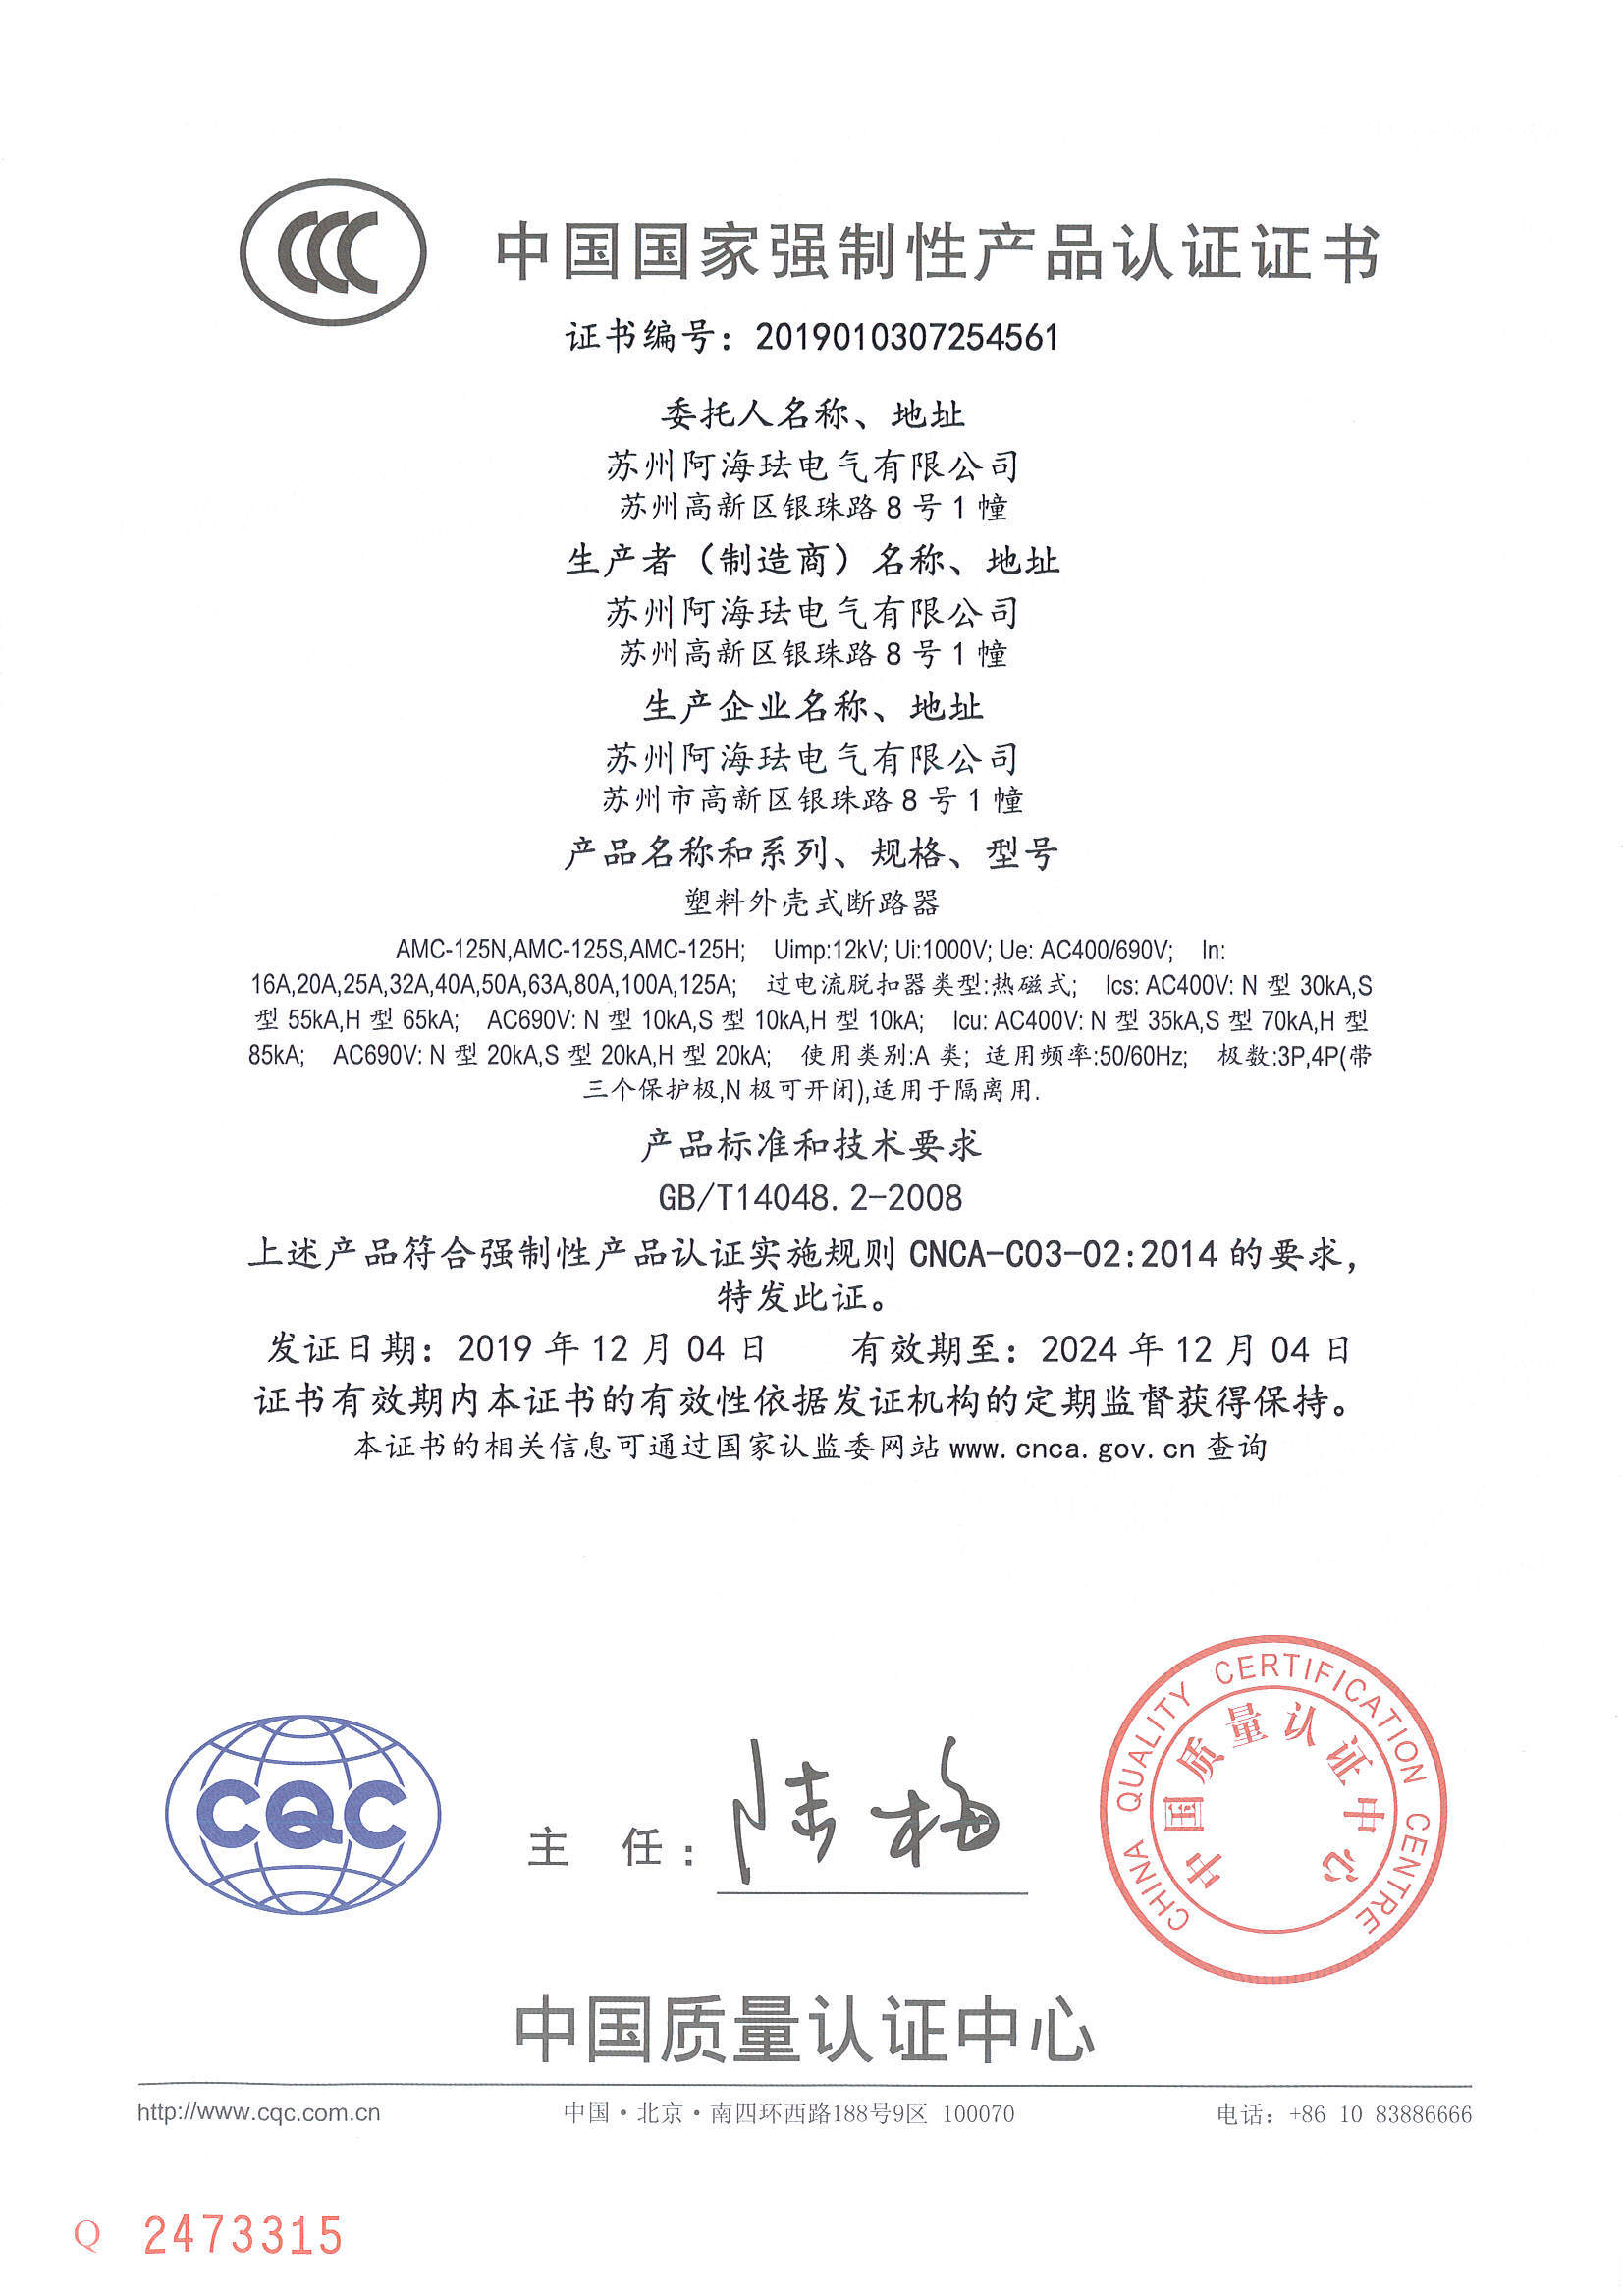 AMC125 CCC certificate